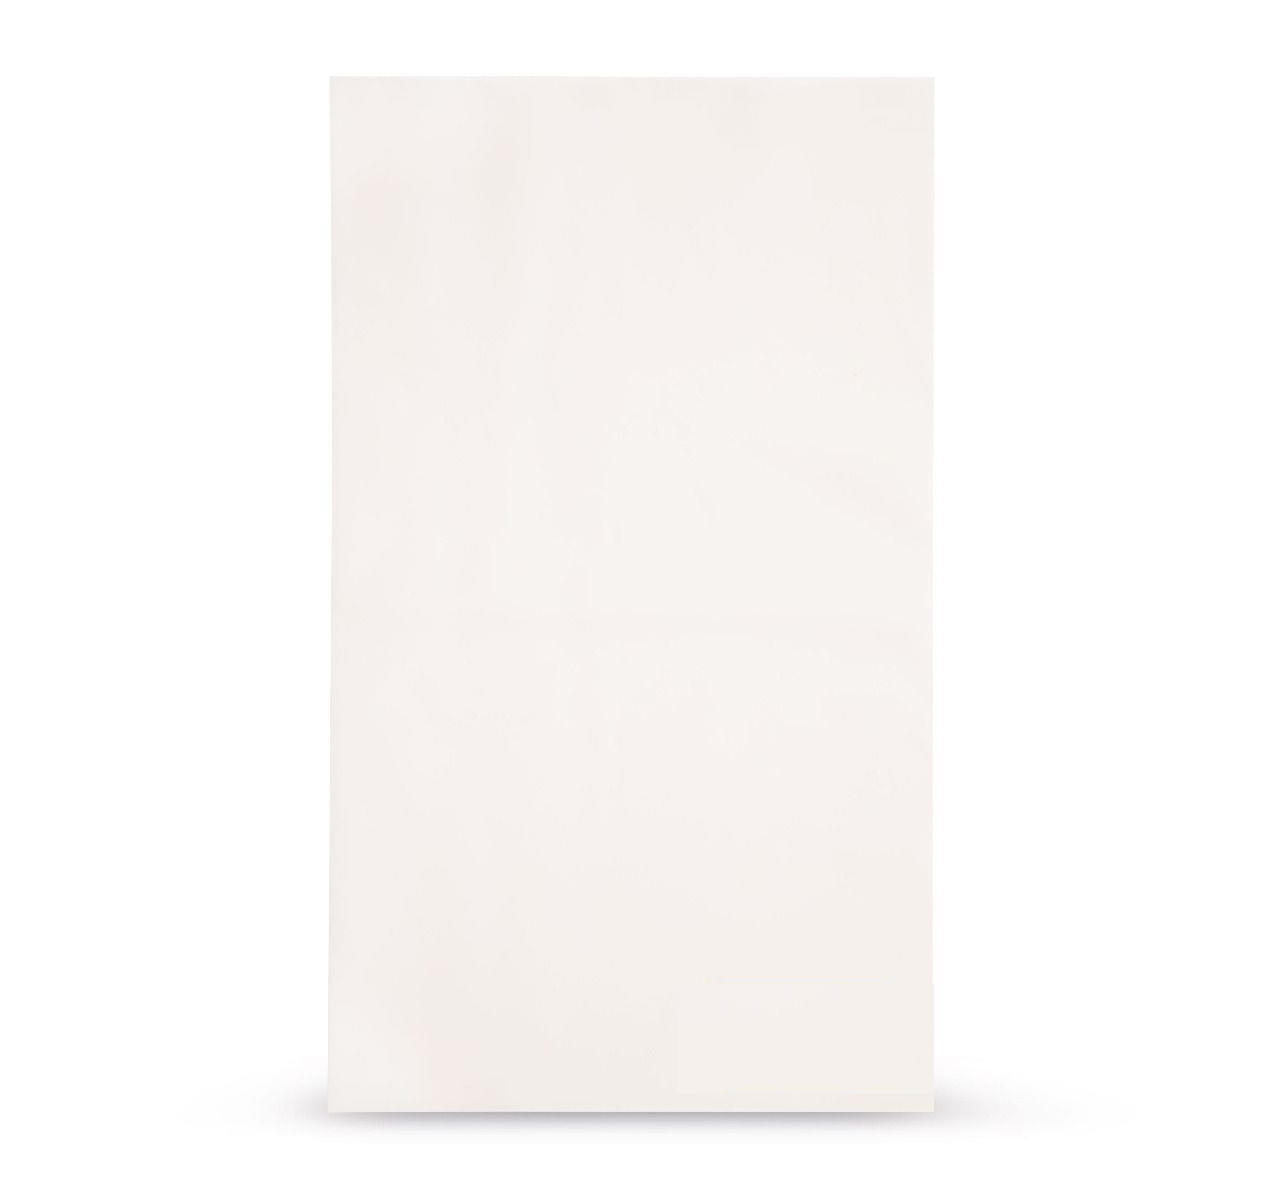 CWS Müllbeutel - Polybeutel, weiß, 80 l, 63 x 85 cm | Karton a 360 Beutel 